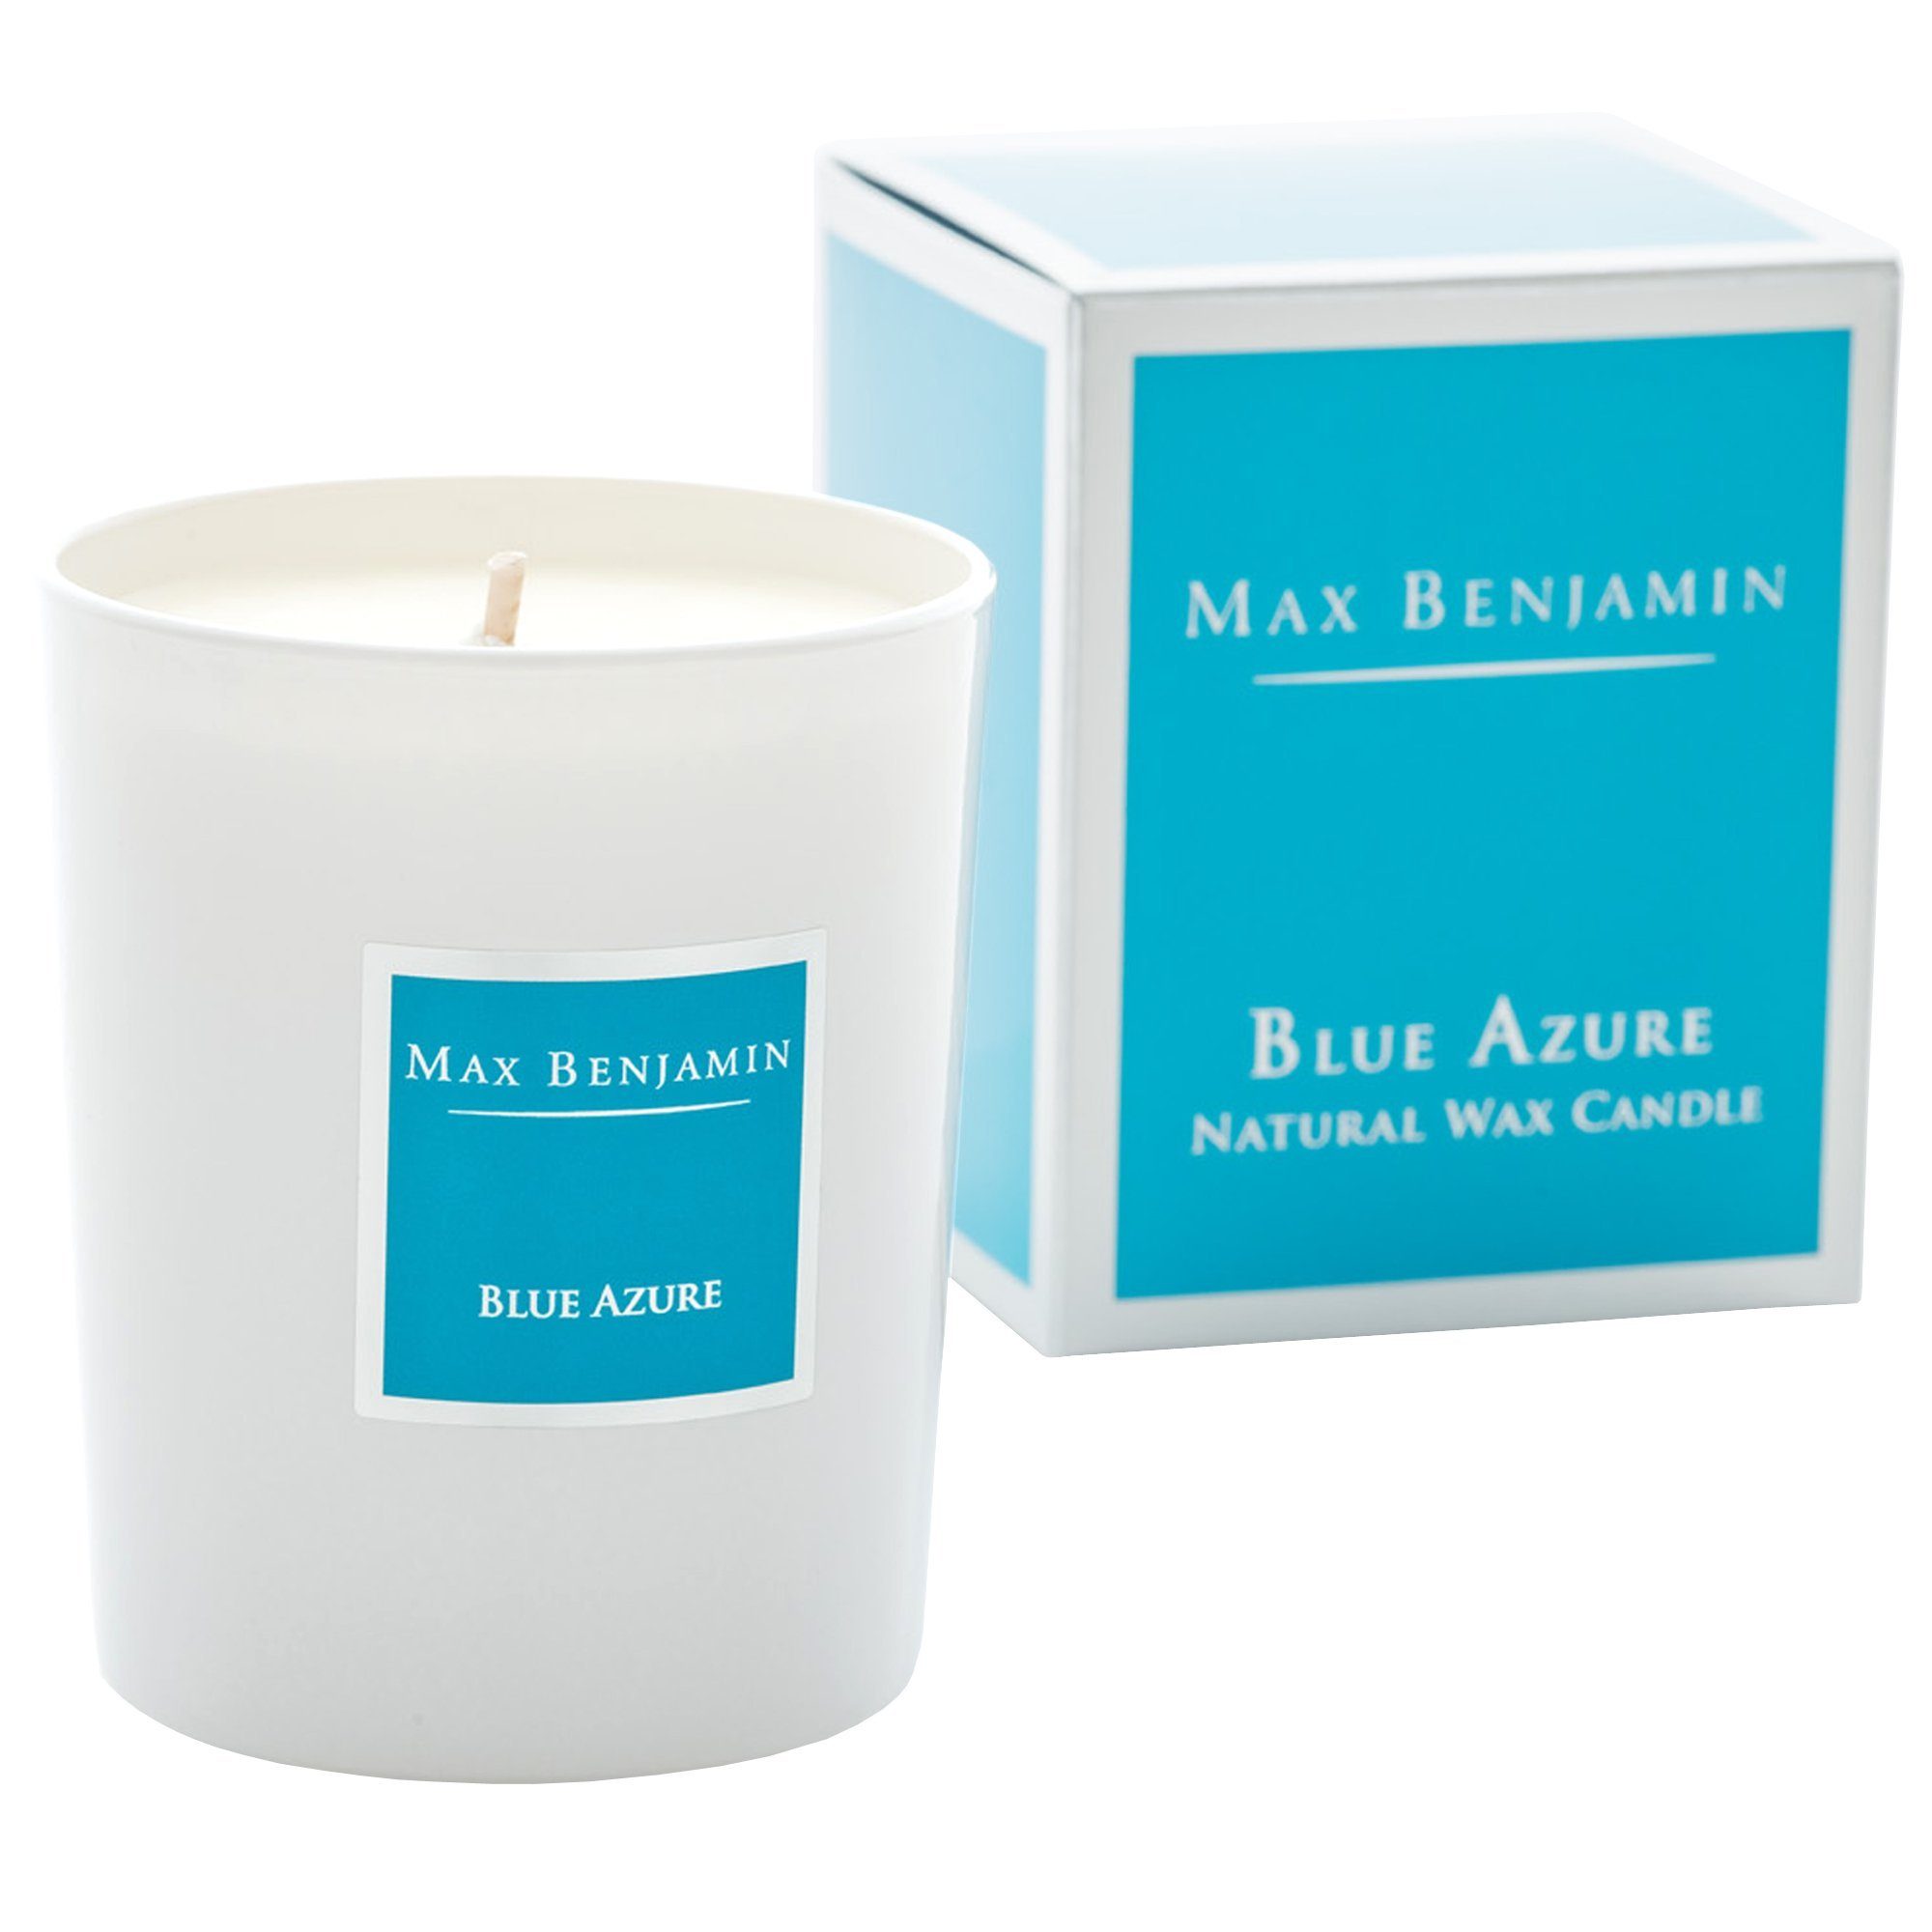 Max Benjamin Duftkerze Blue Azure; Wohlduftende Kerze in dekorativem Glas